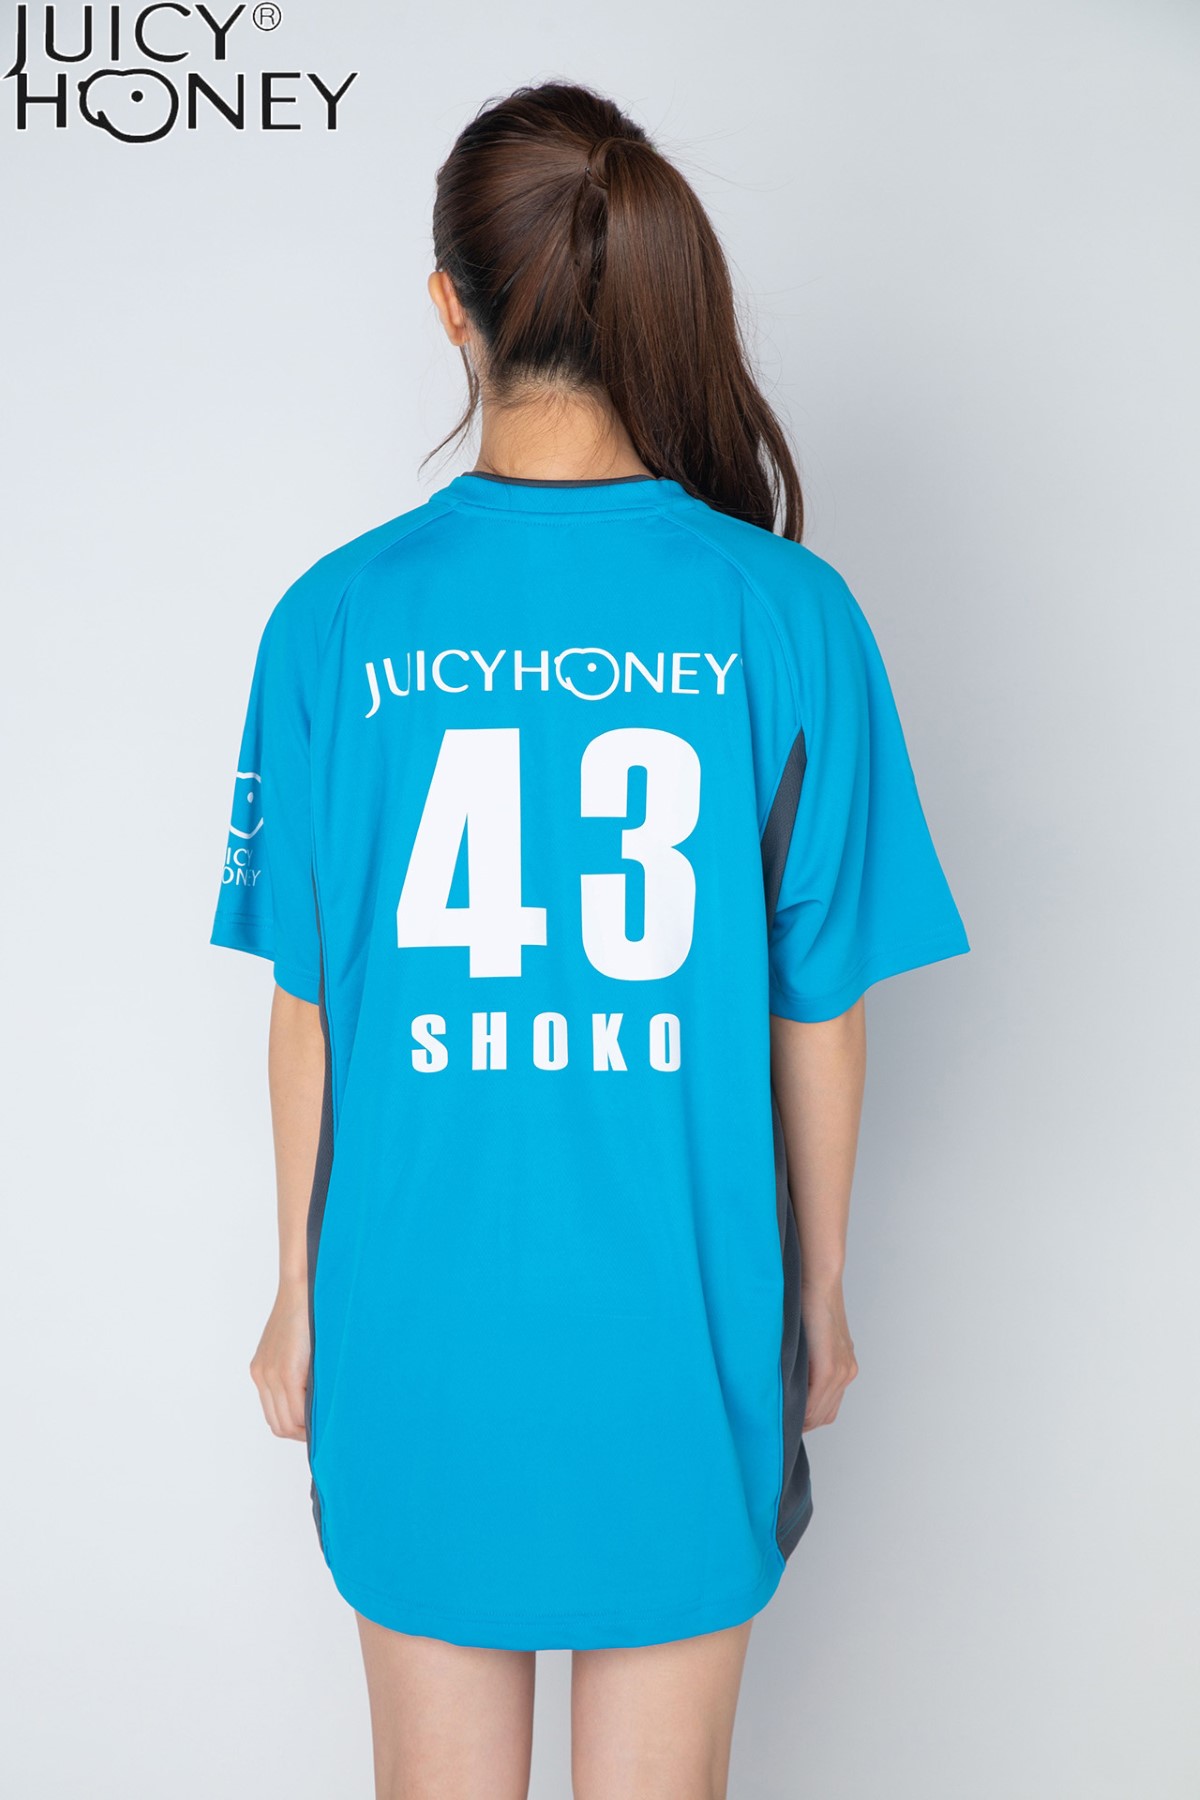 X City Juicy Honey Kana Momonogi 桃乃木かな, Takahashi Shoko 高橋しょう子 Trading Card Linked Photo Collection 15th 0040 7207010700.jpg